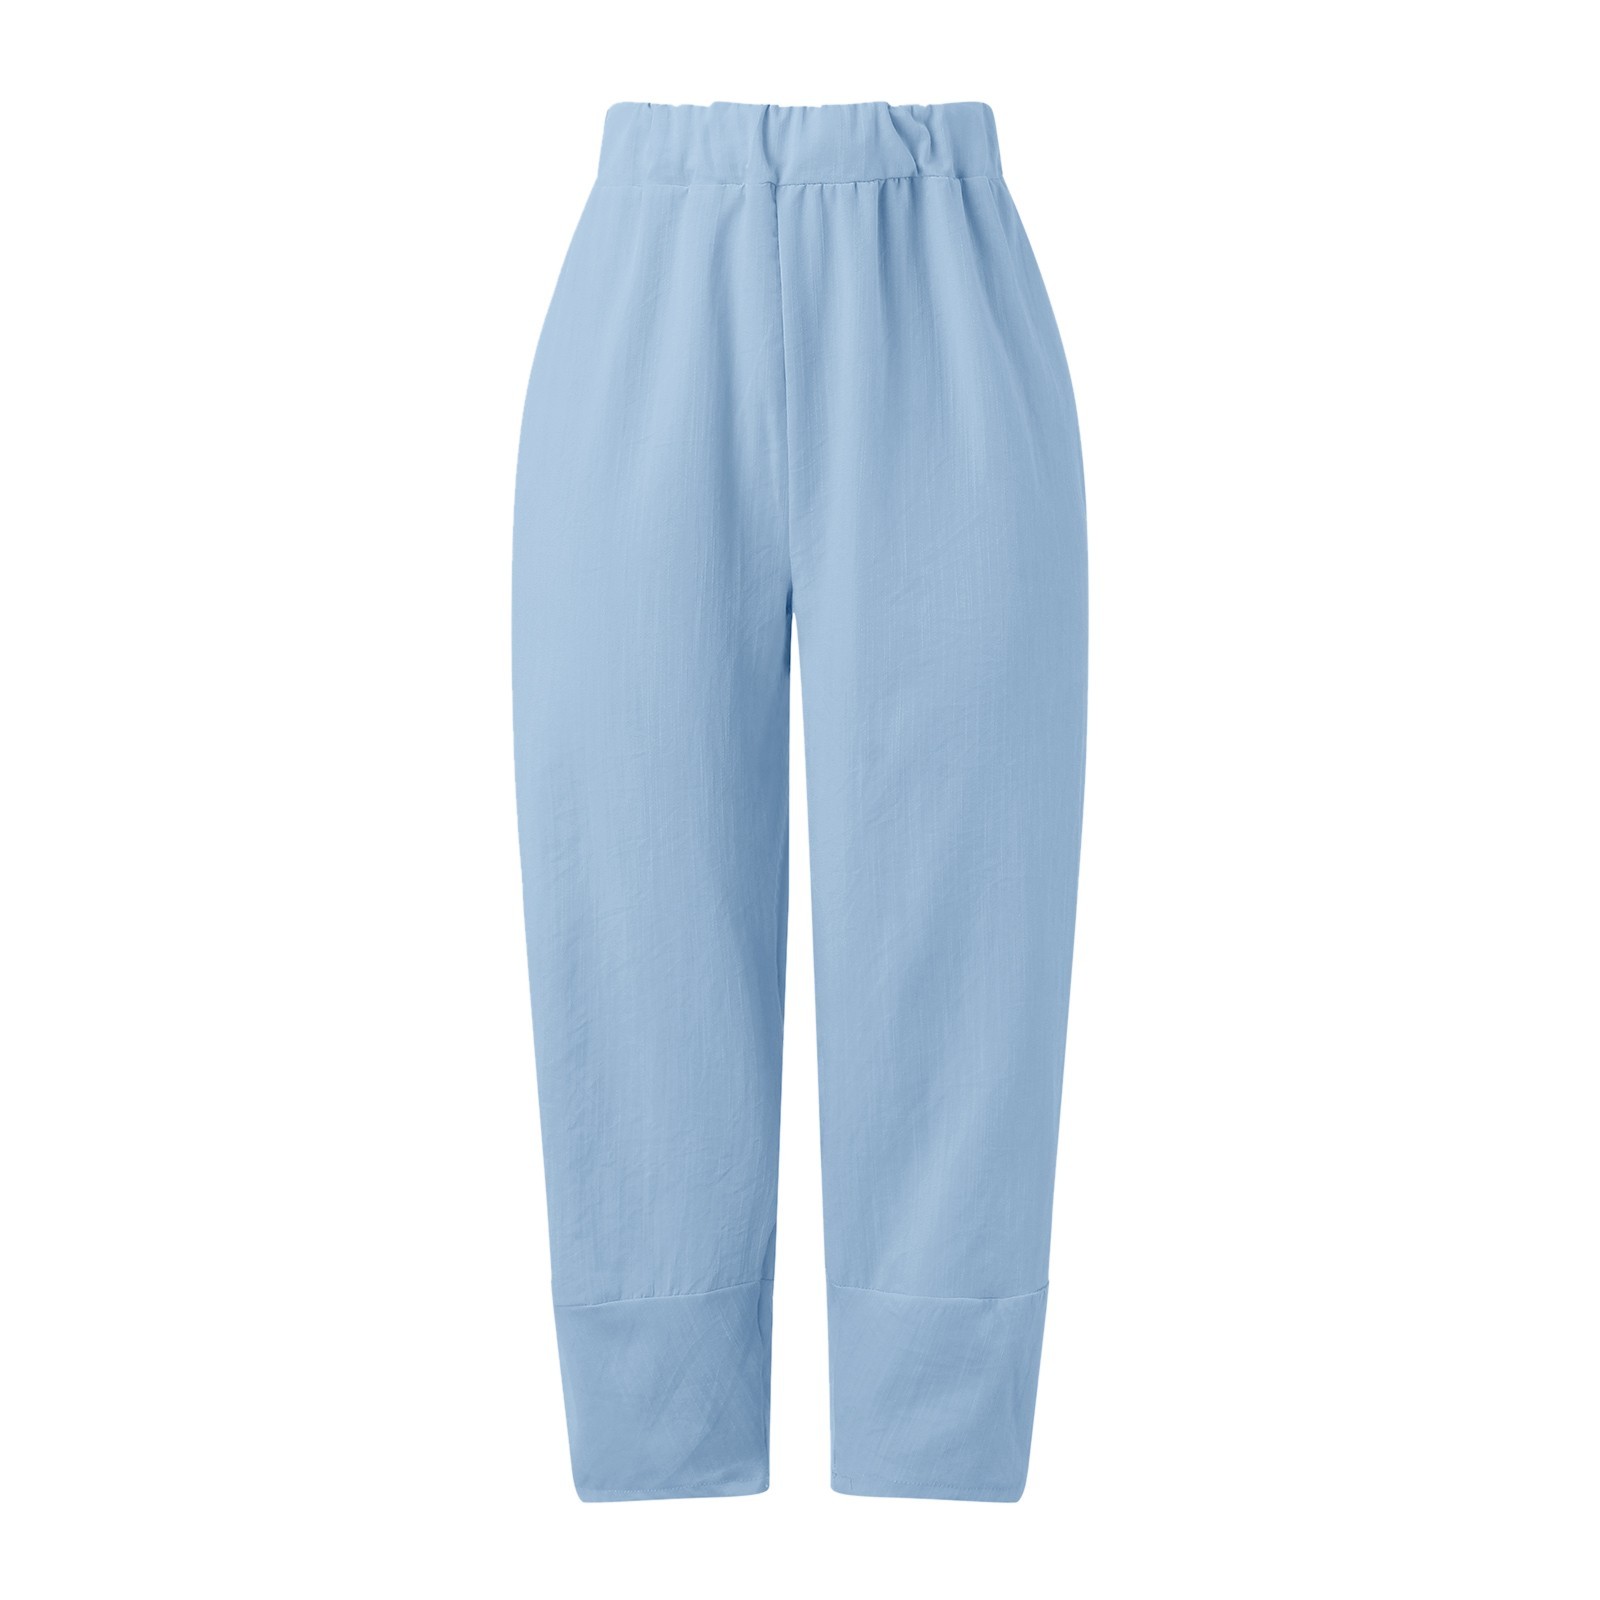 Aayomet Sweatpants for Men Big And Tall Pockets Elastic Waist Pants ...